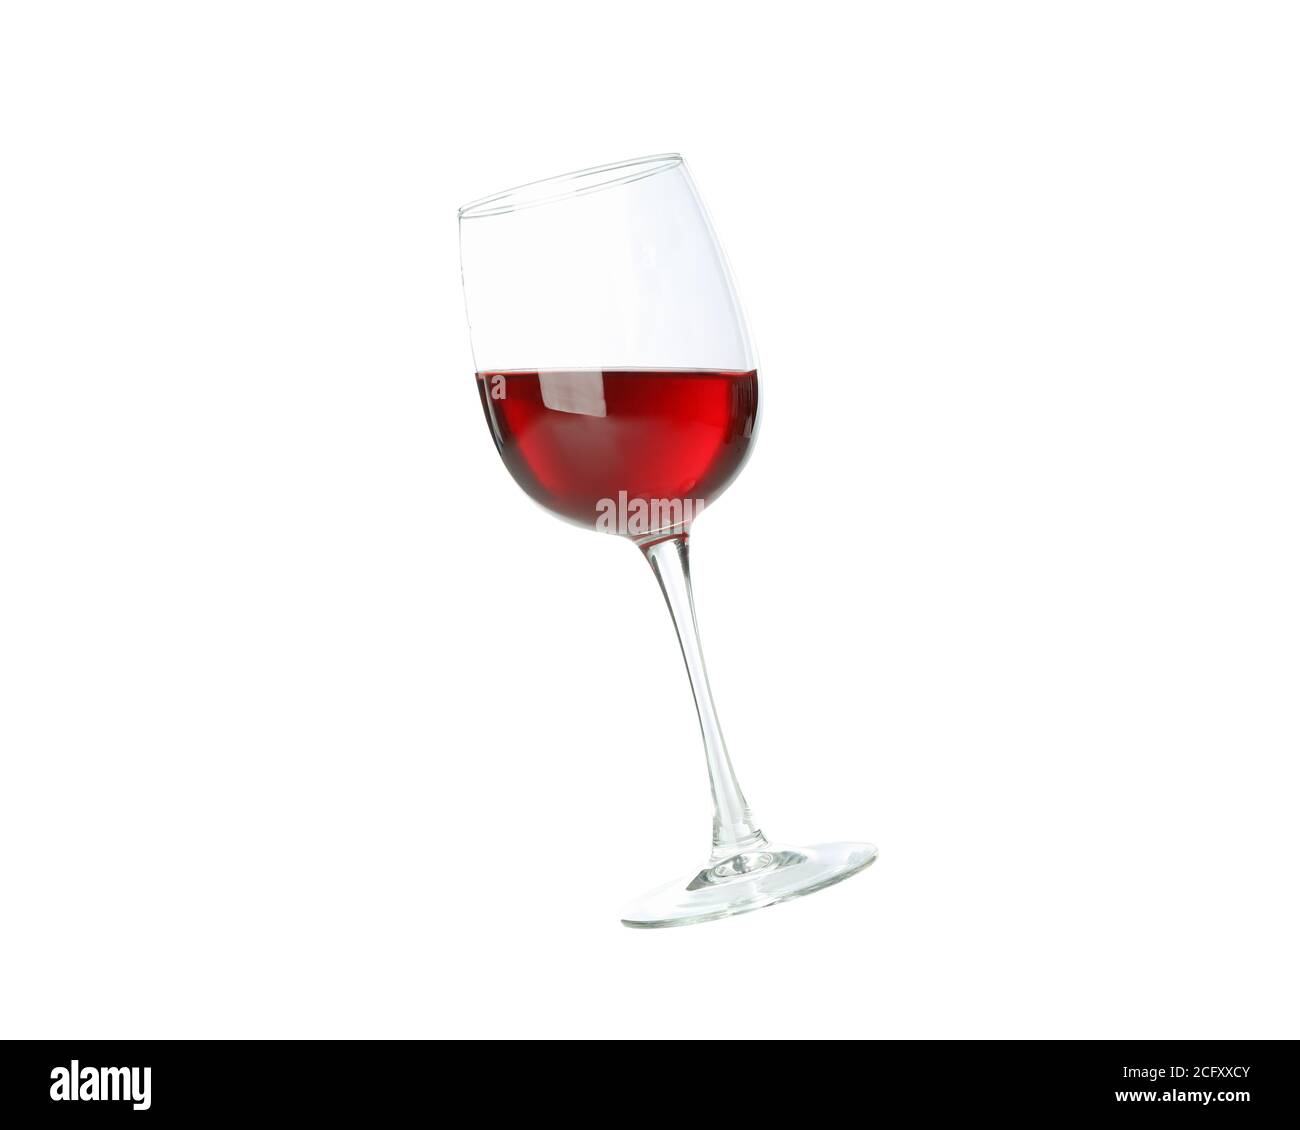 https://c8.alamy.com/comp/2CFXXCY/glass-of-wine-isolated-on-white-background-2CFXXCY.jpg